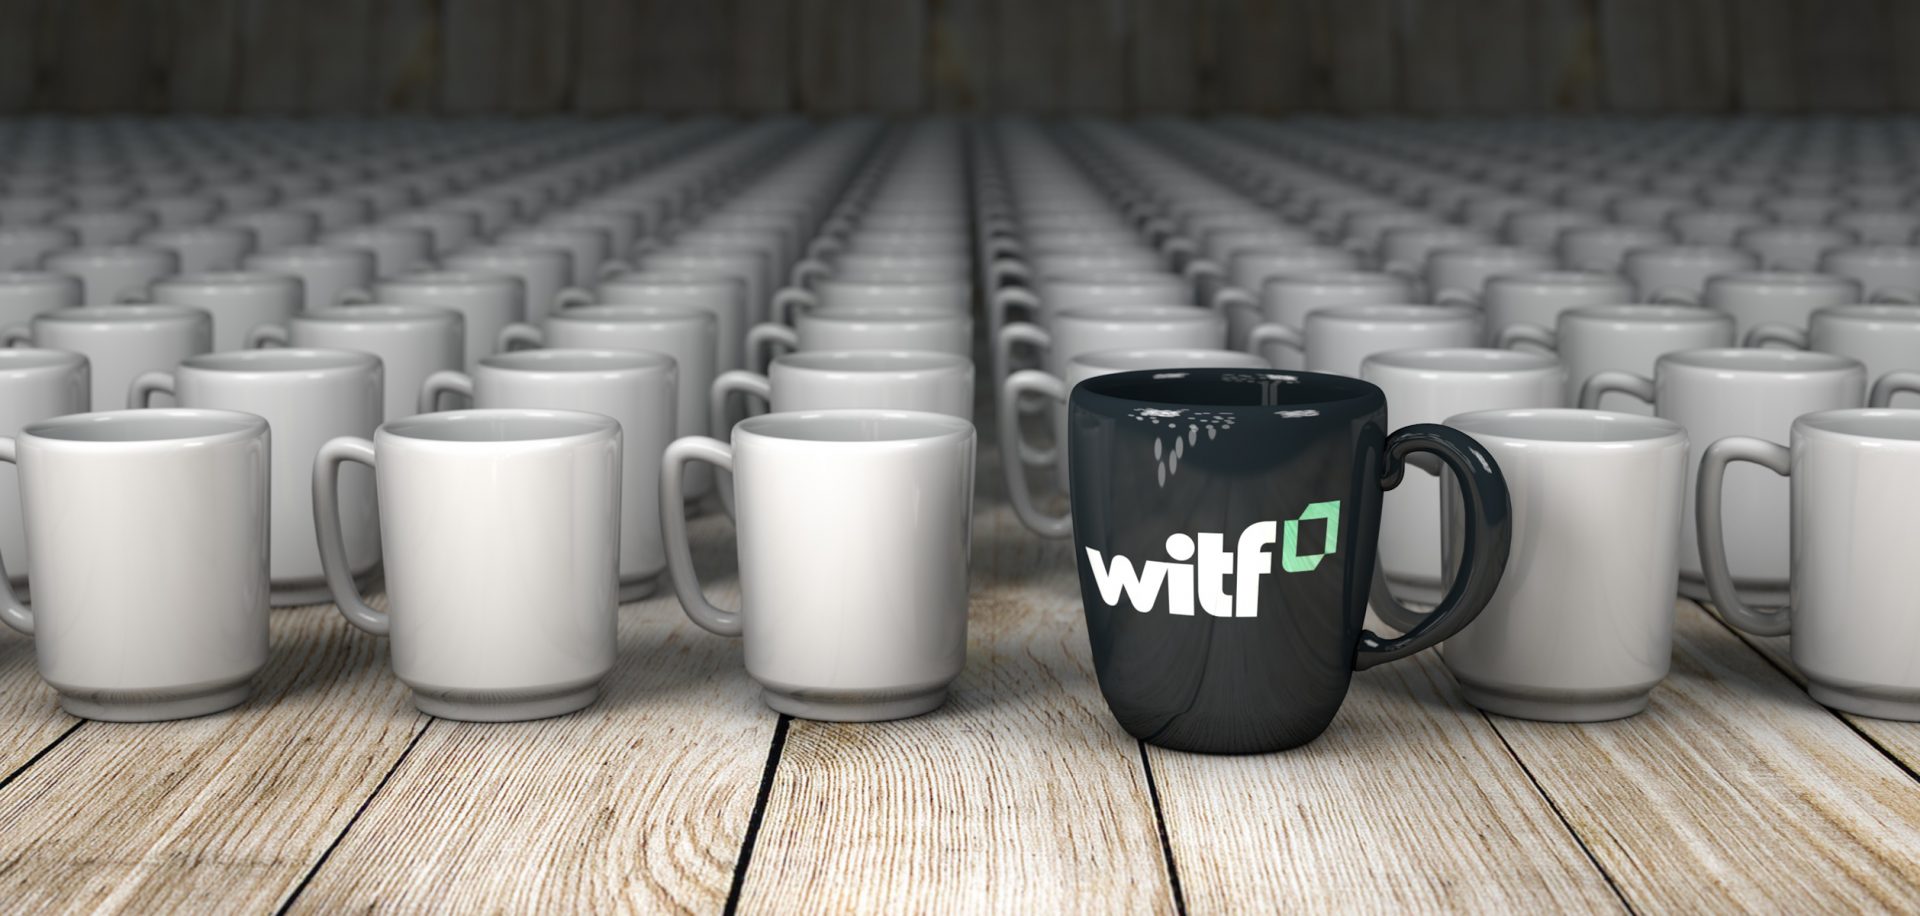 Shows a black WITF coffee mug in a sea of identical bland white coffee mugs.